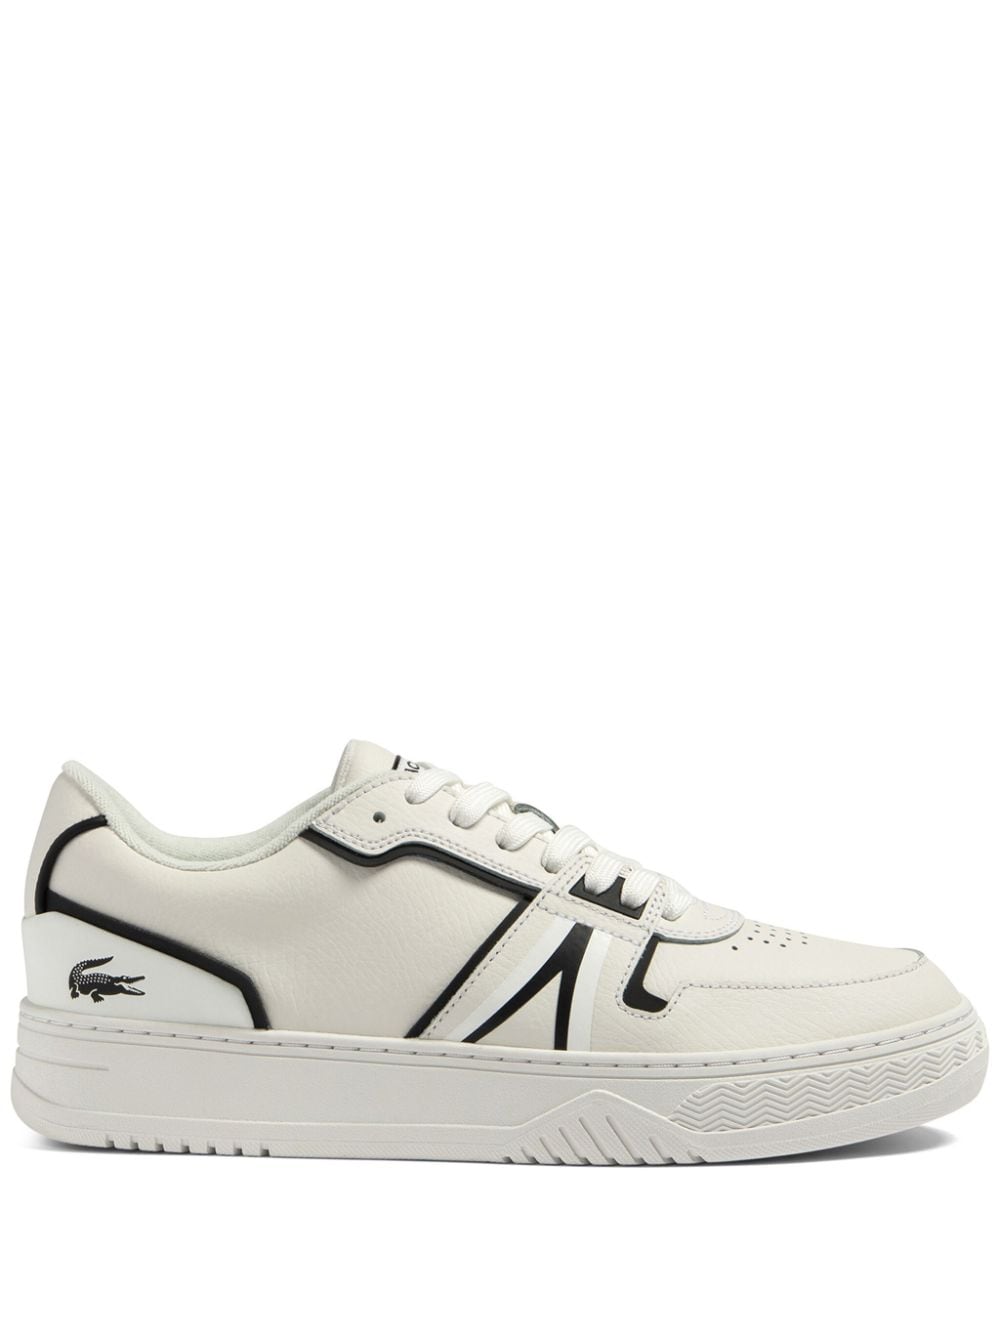 Lacoste L001 Baseline leather sneakers - White von Lacoste